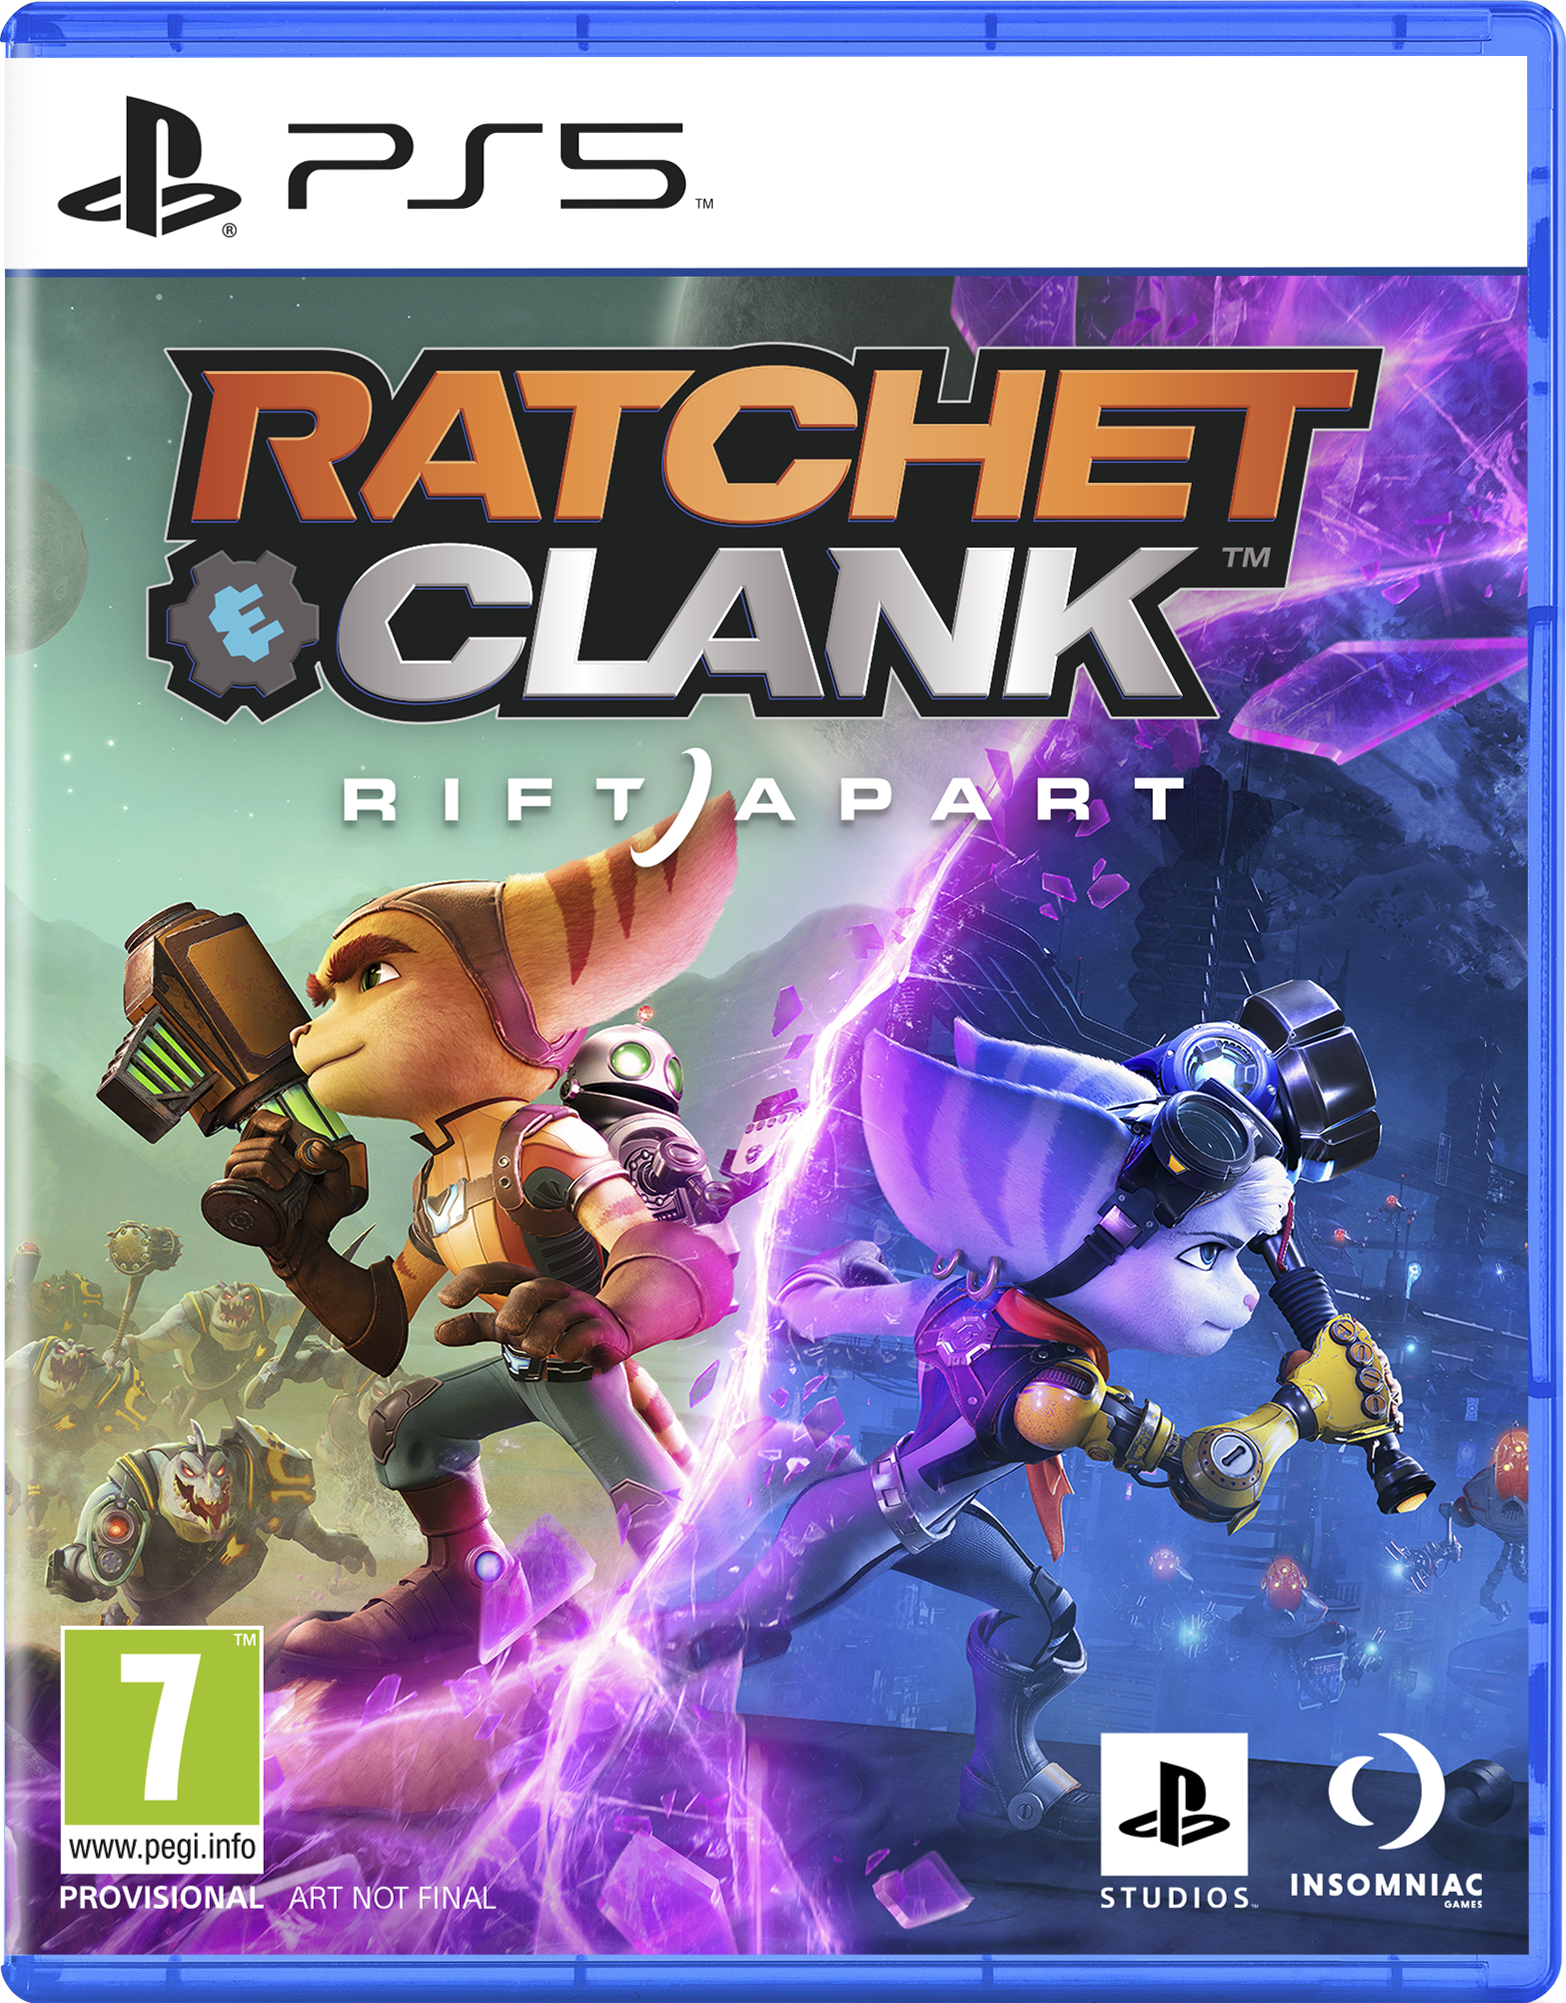 Ratchet & Clank: Rift apart